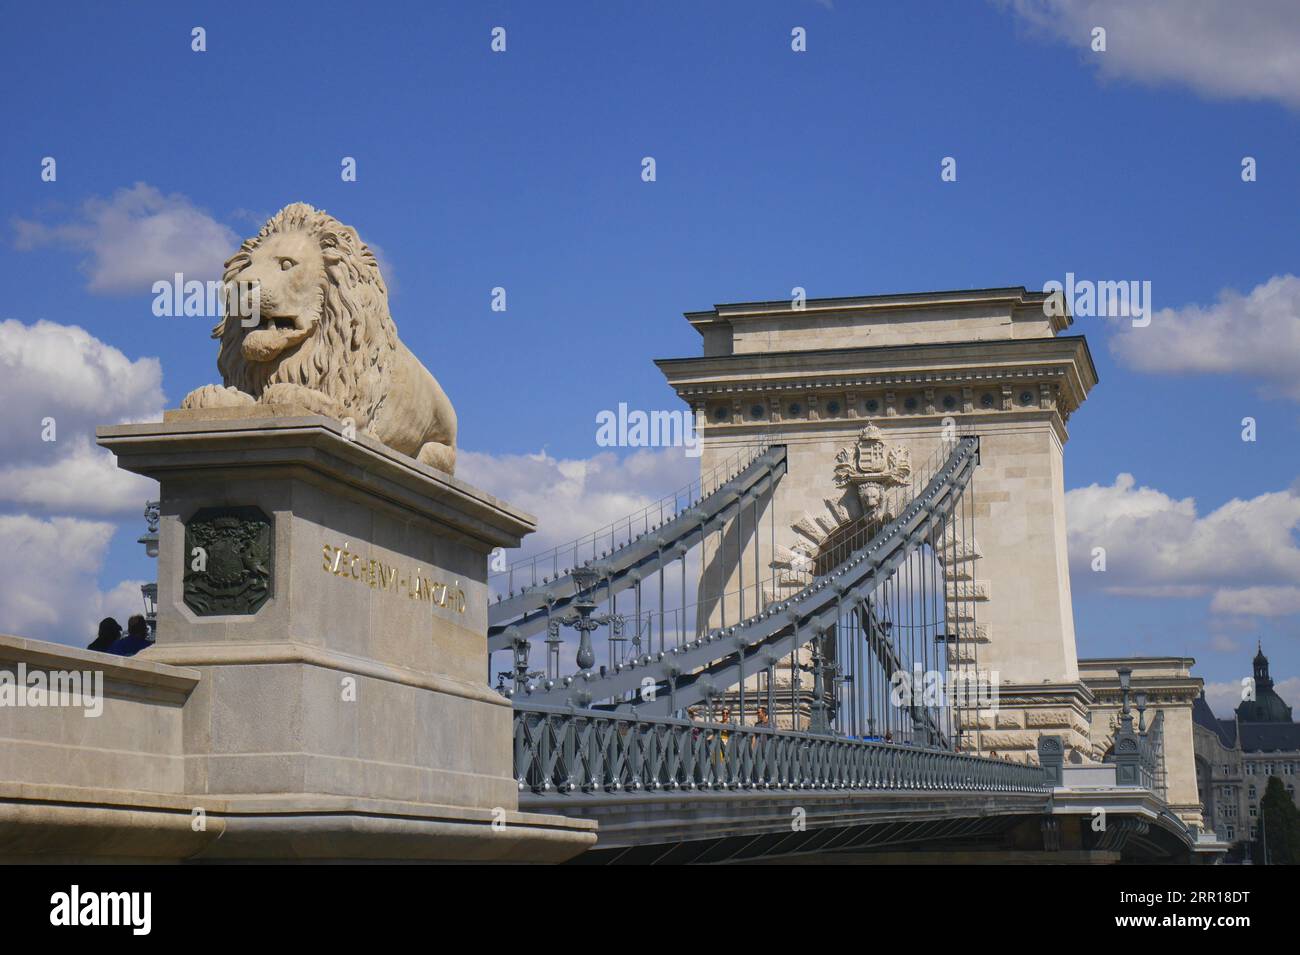 Chain Bridge, Szechenyi Lanchid, connecting Buda and Pest across the River Danube, Budapest, Hungary Stock Photo